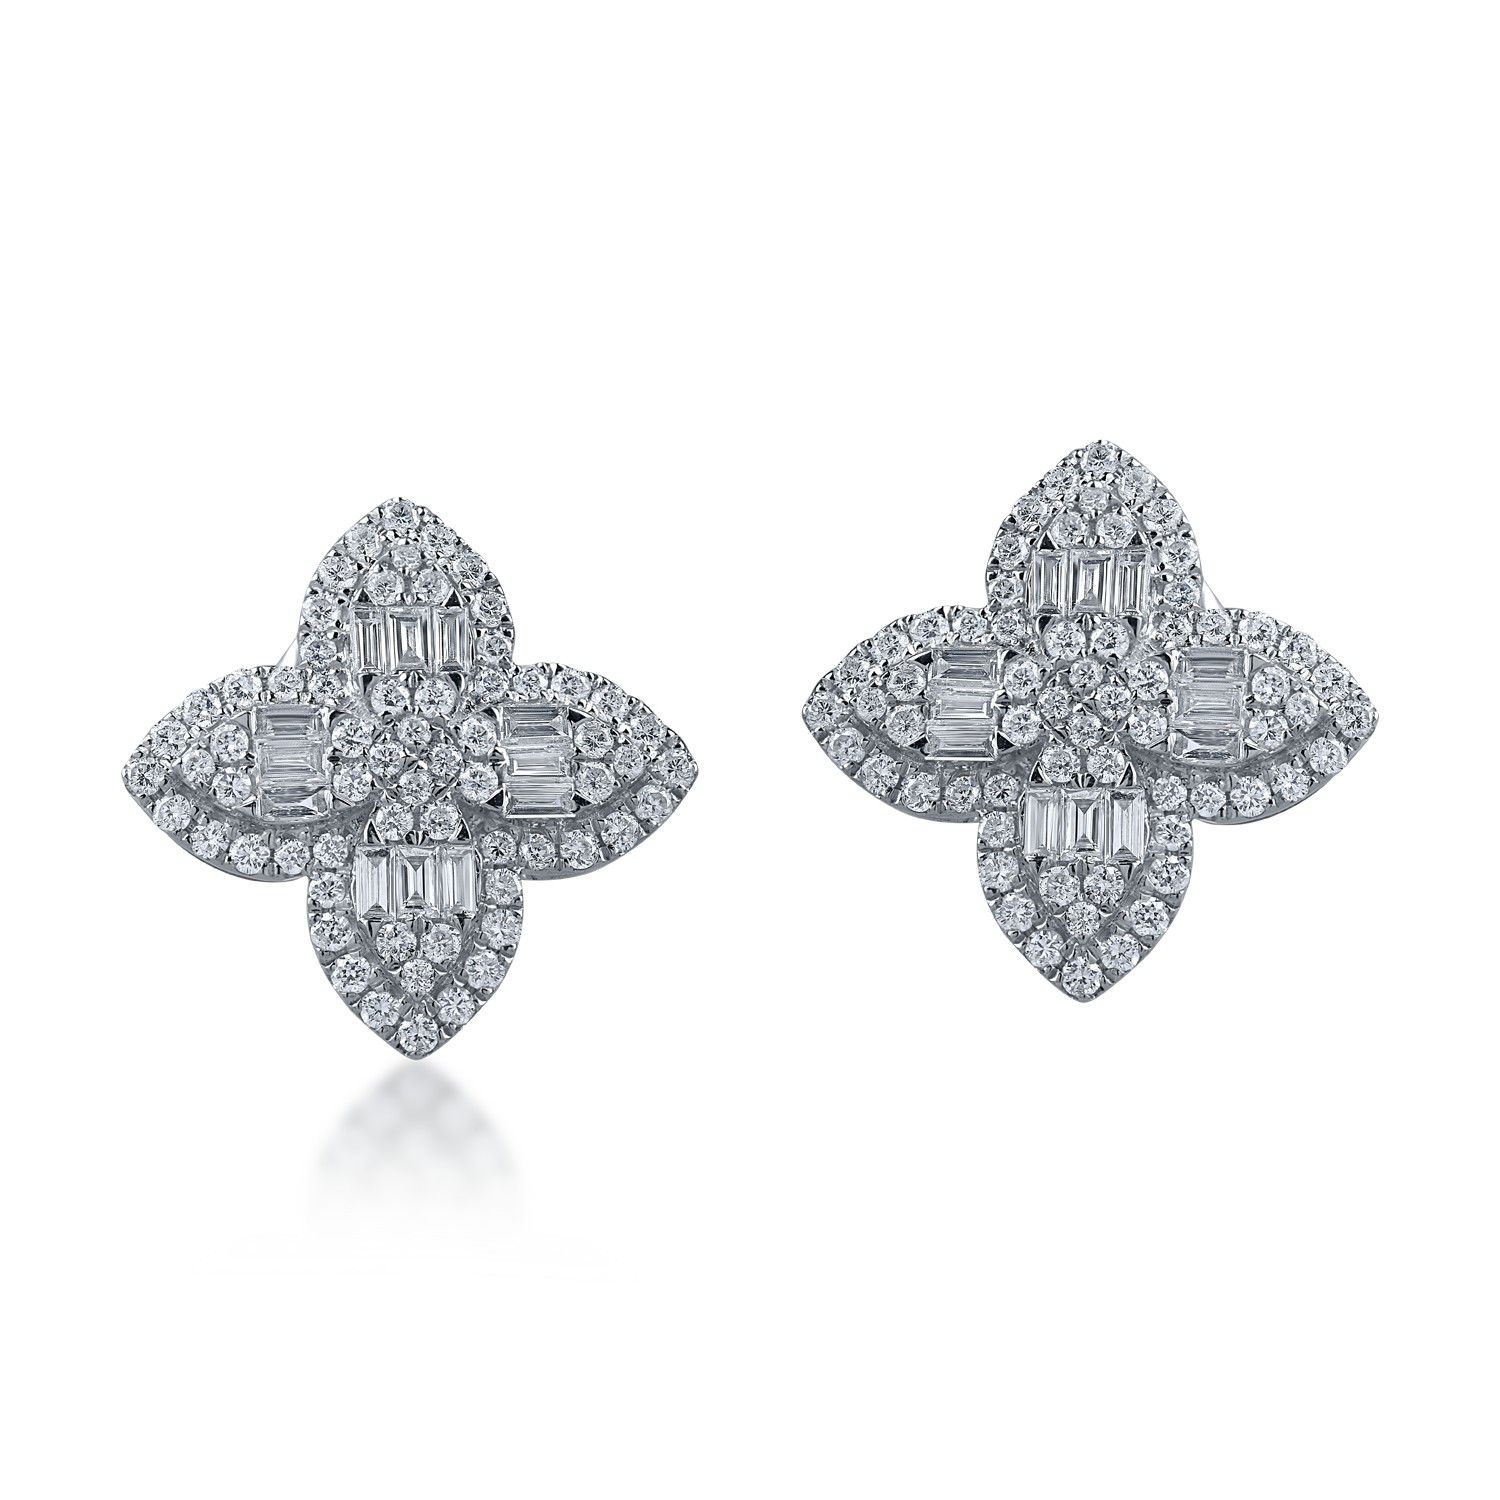 White gold geometric earrings with 1.1ct diamonds